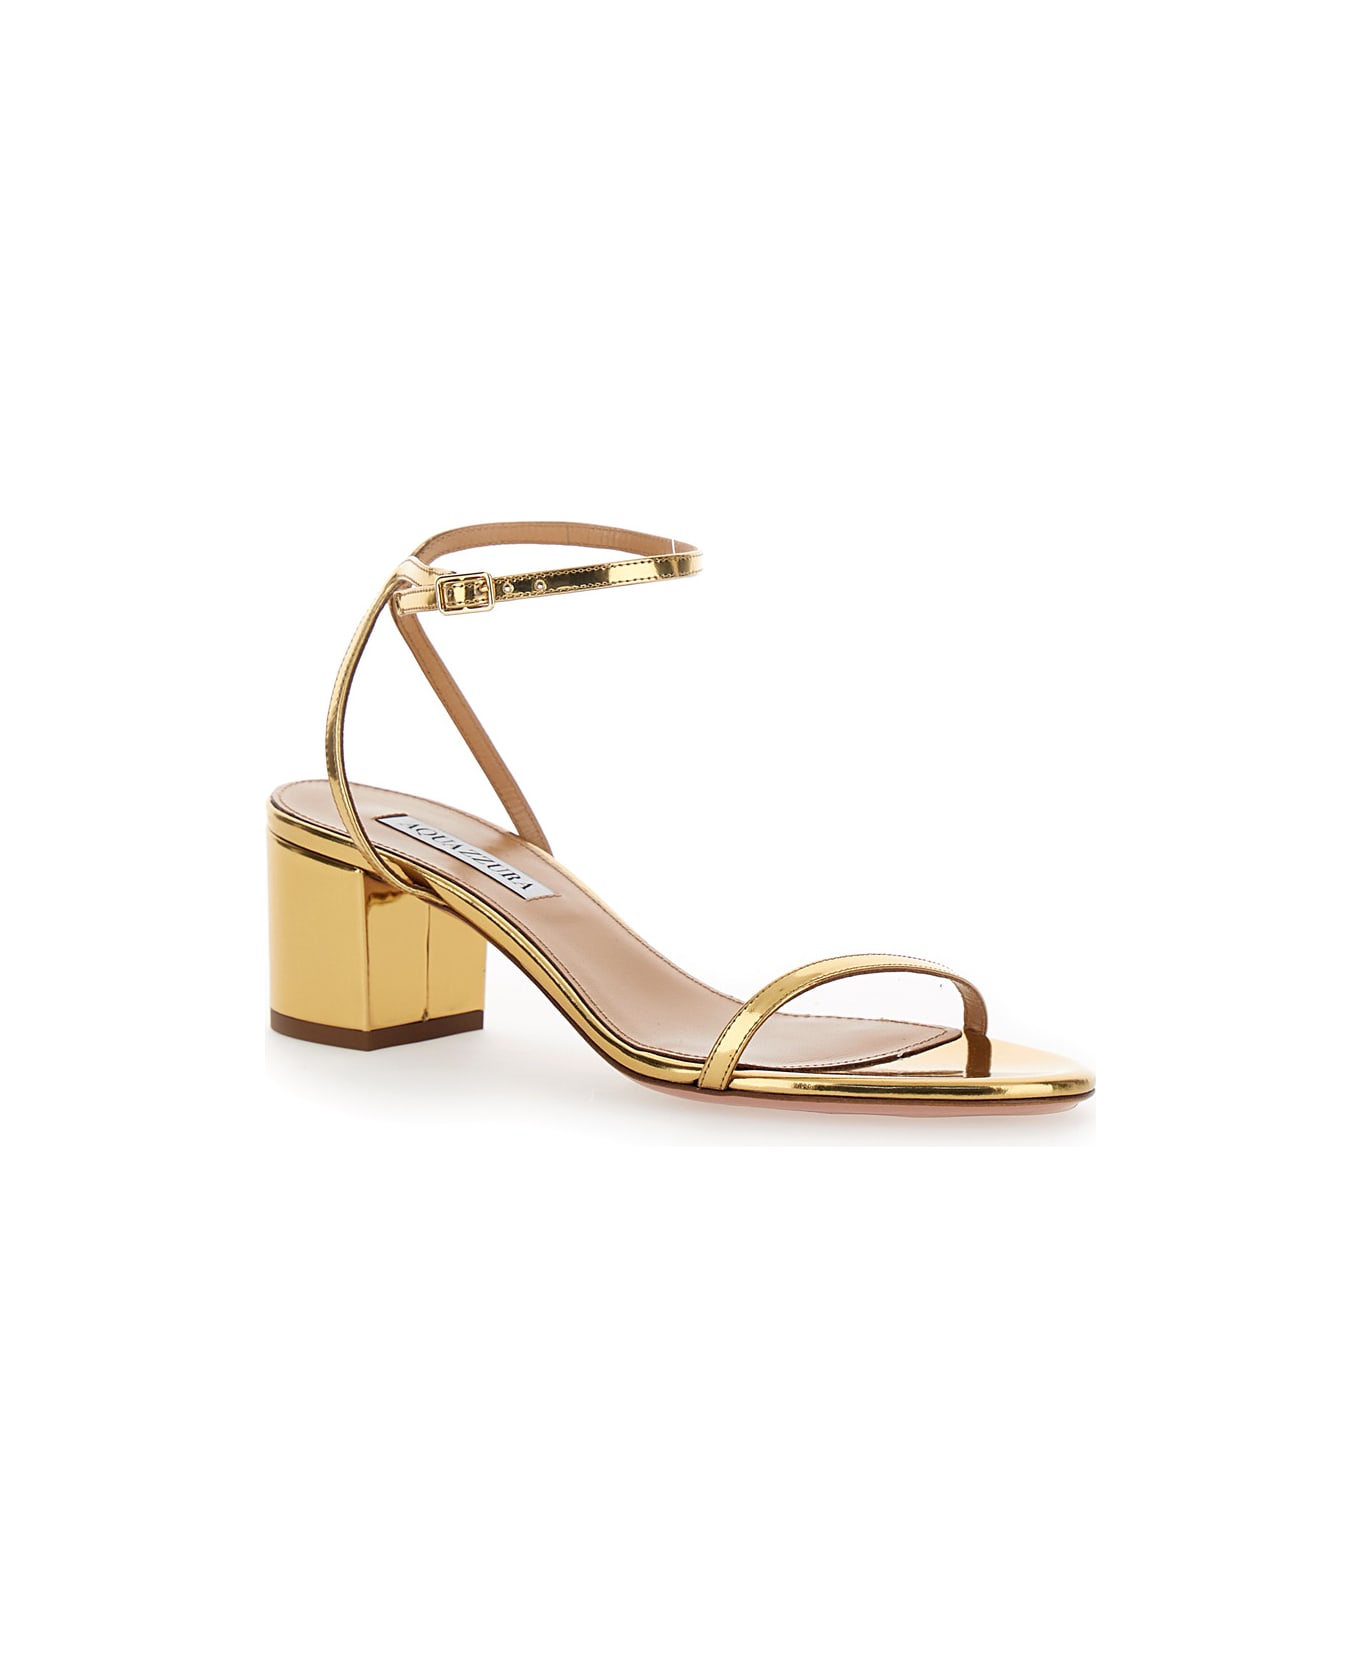 Aquazzura 'olie' Gold Tone Sandals With Block Heel In Laminated Leather Woman - Metallic